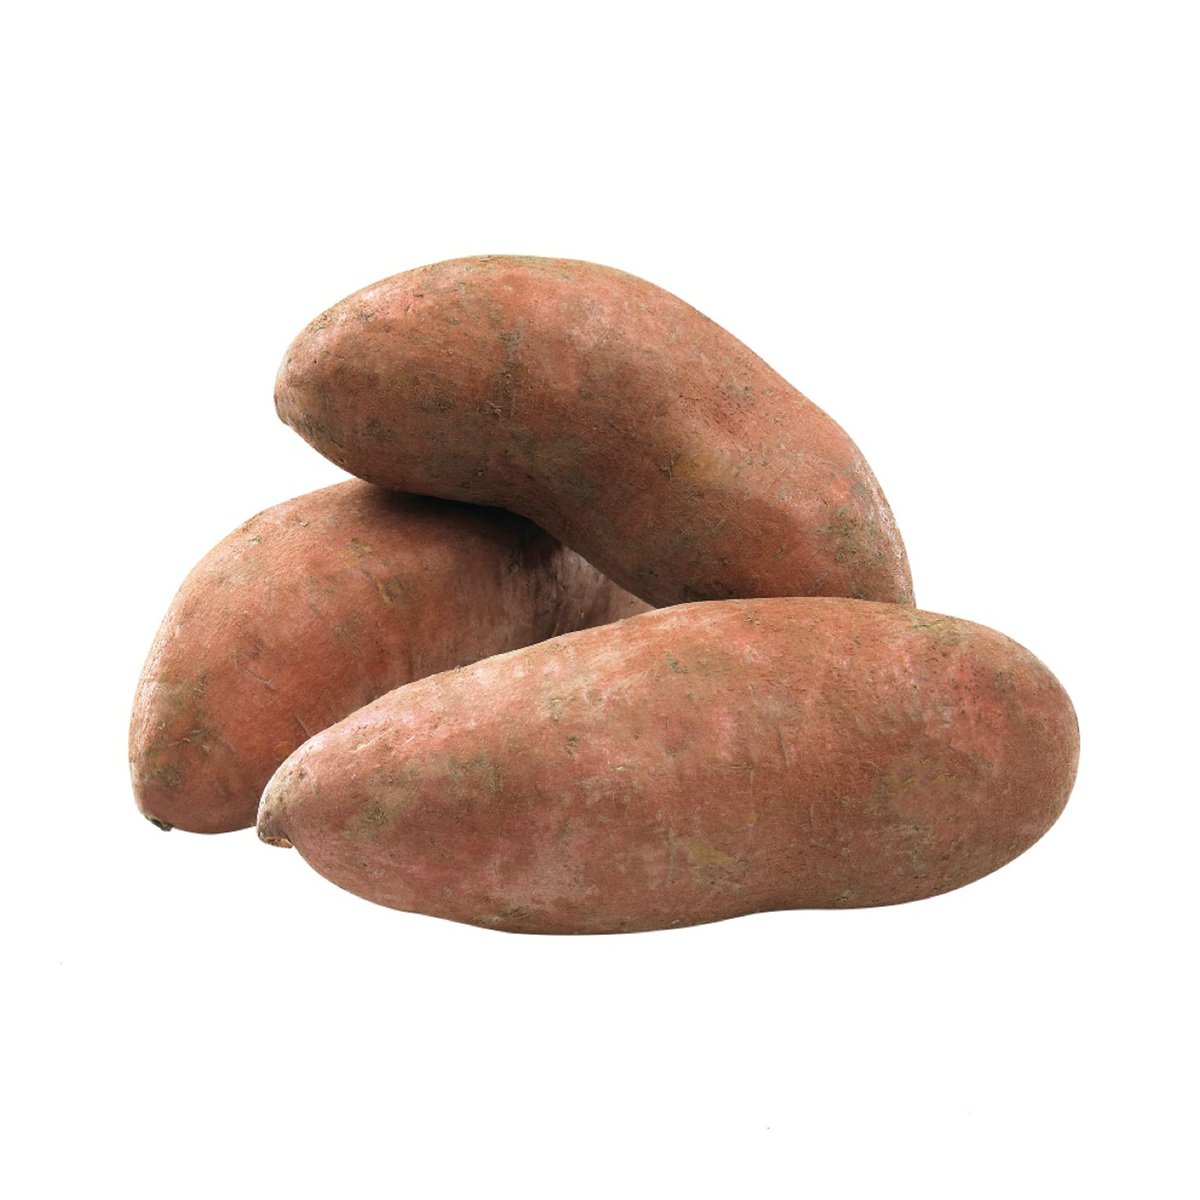 Buy Organic Sweet Potato 500 g Online at Best Price | Organic Fruits | Lulu UAE in UAE